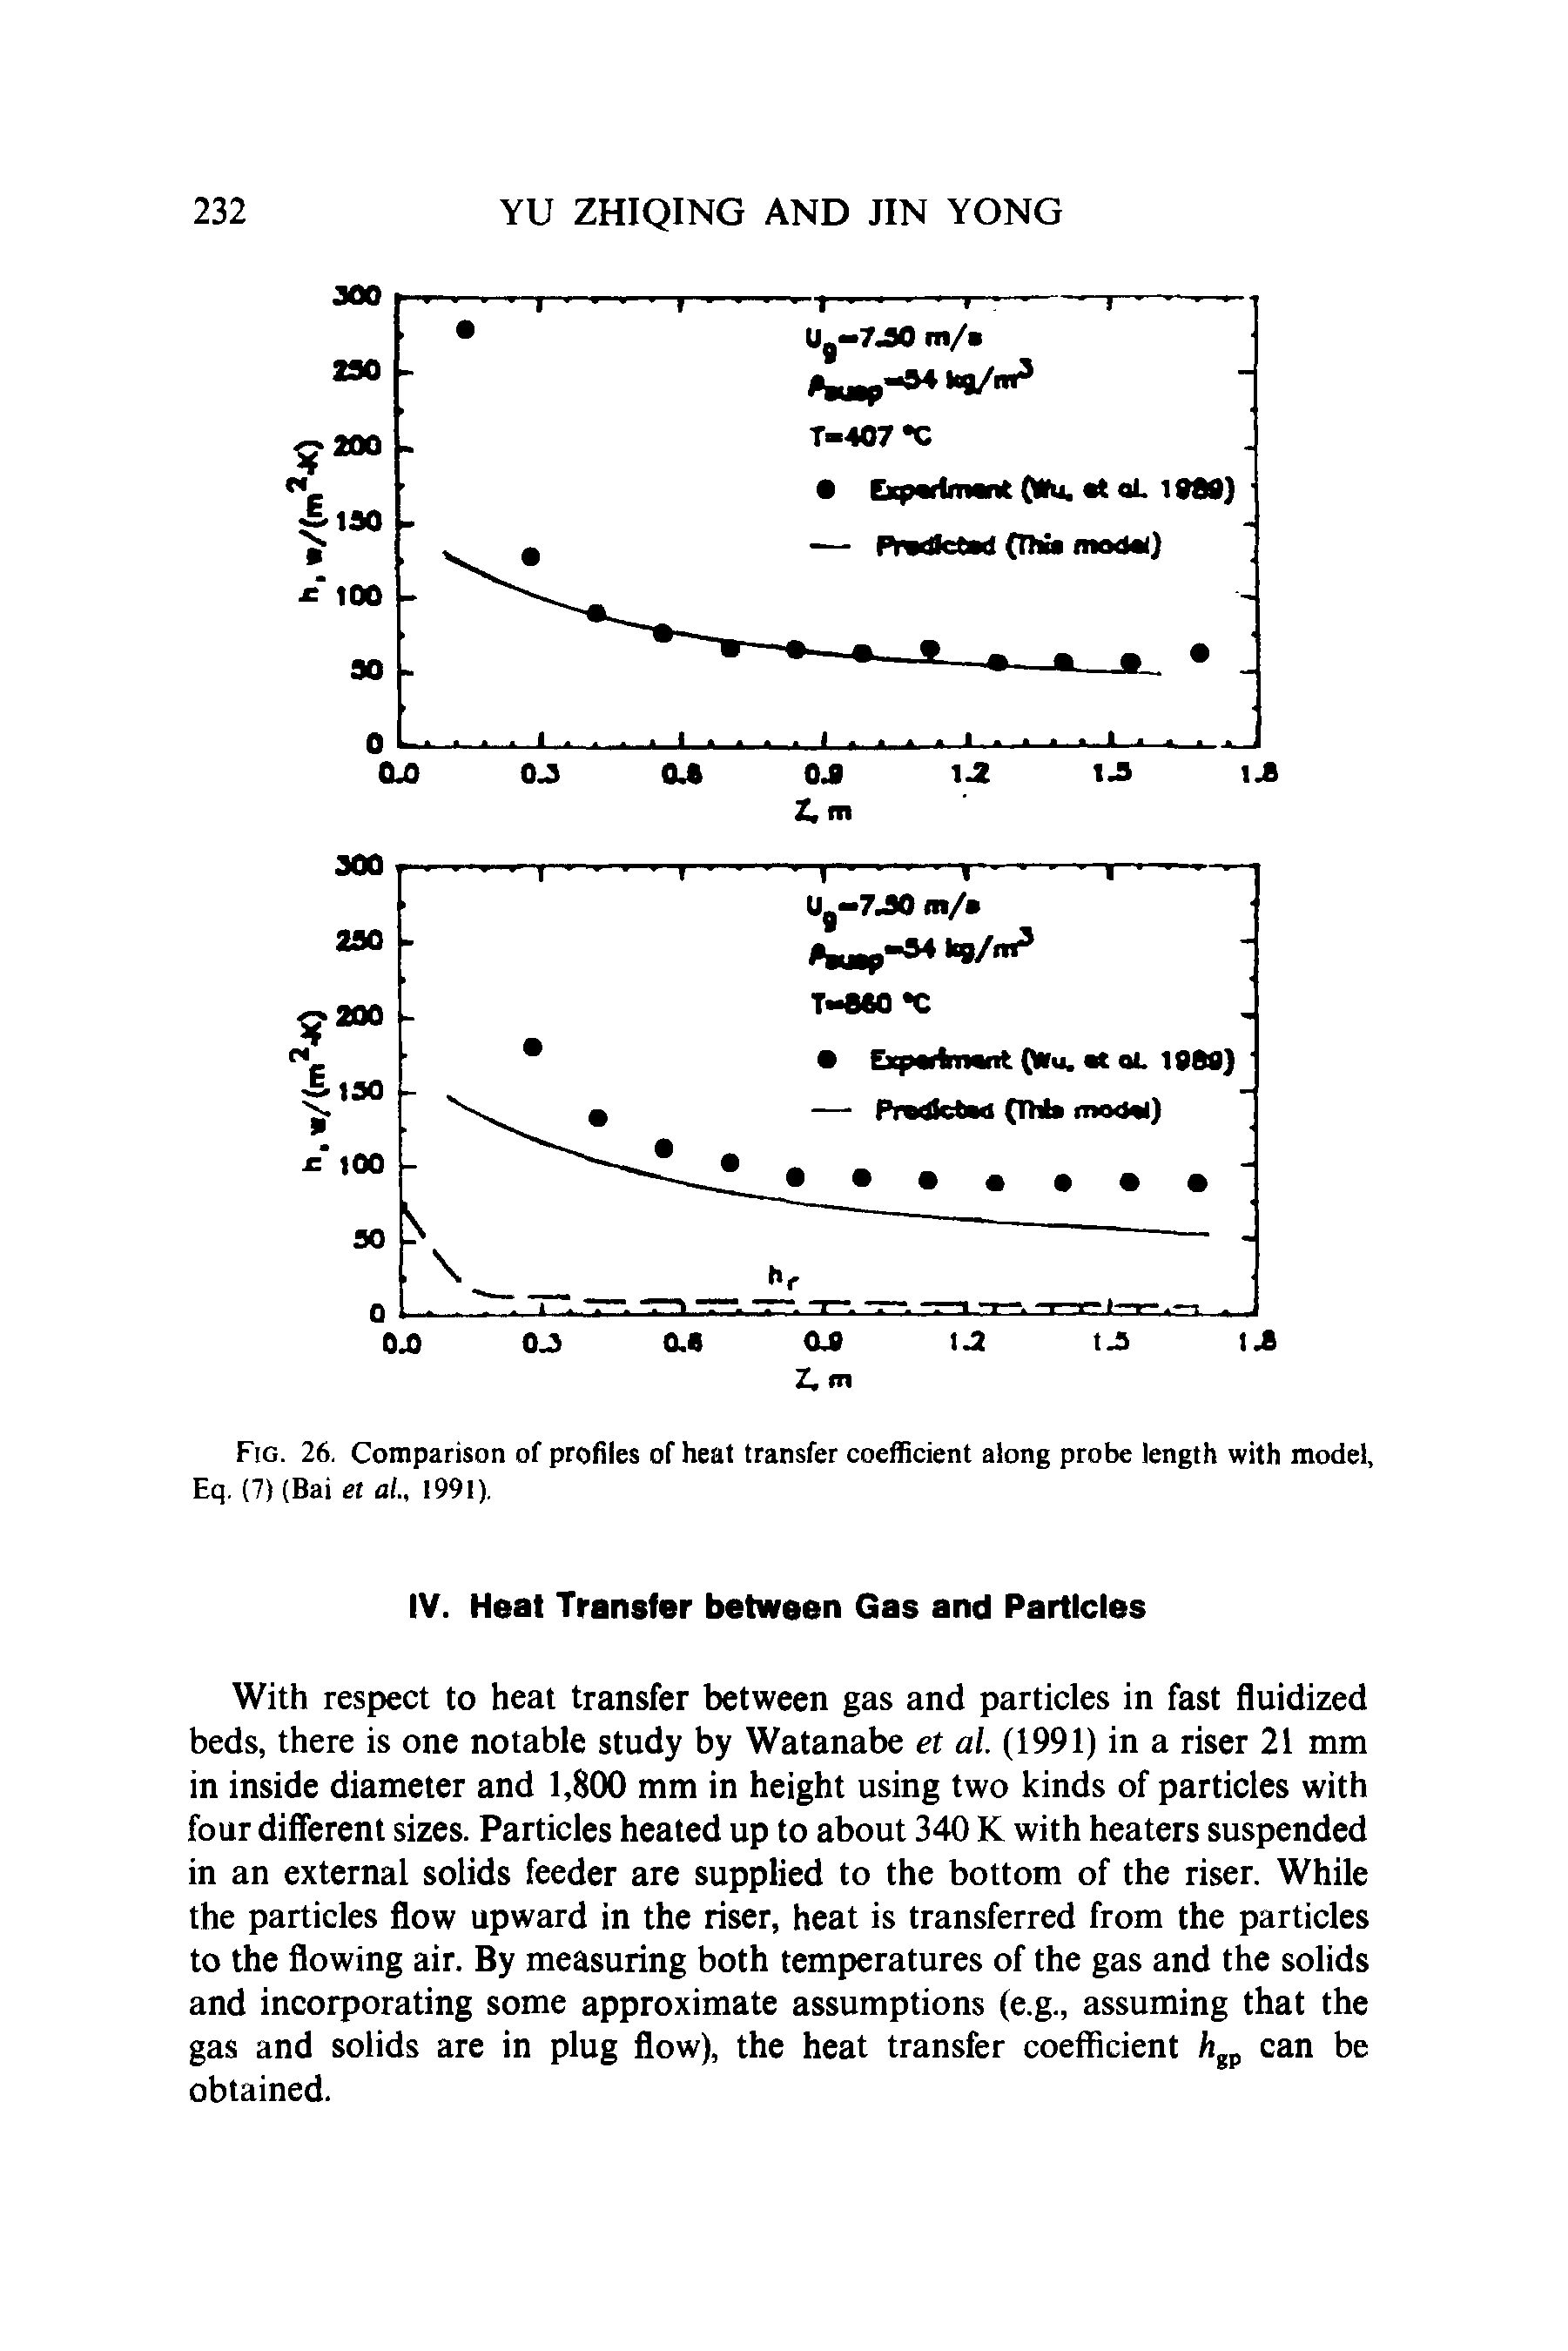 Fig. 26. Comparison of profiles of heat transfer coefficient along probe length with model, Eq. (7) (Bai et al., 1991).